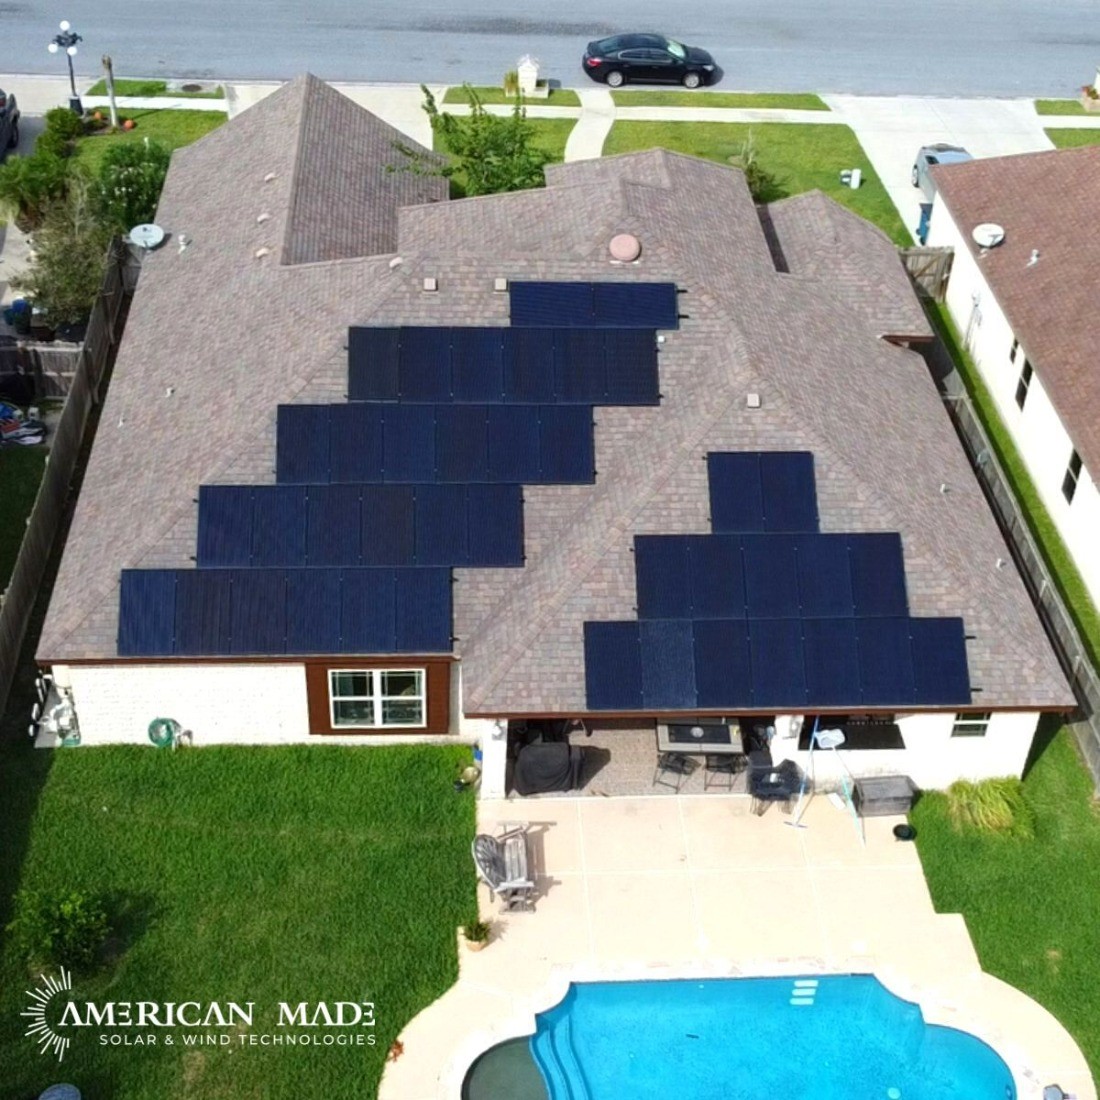 American made solar panels